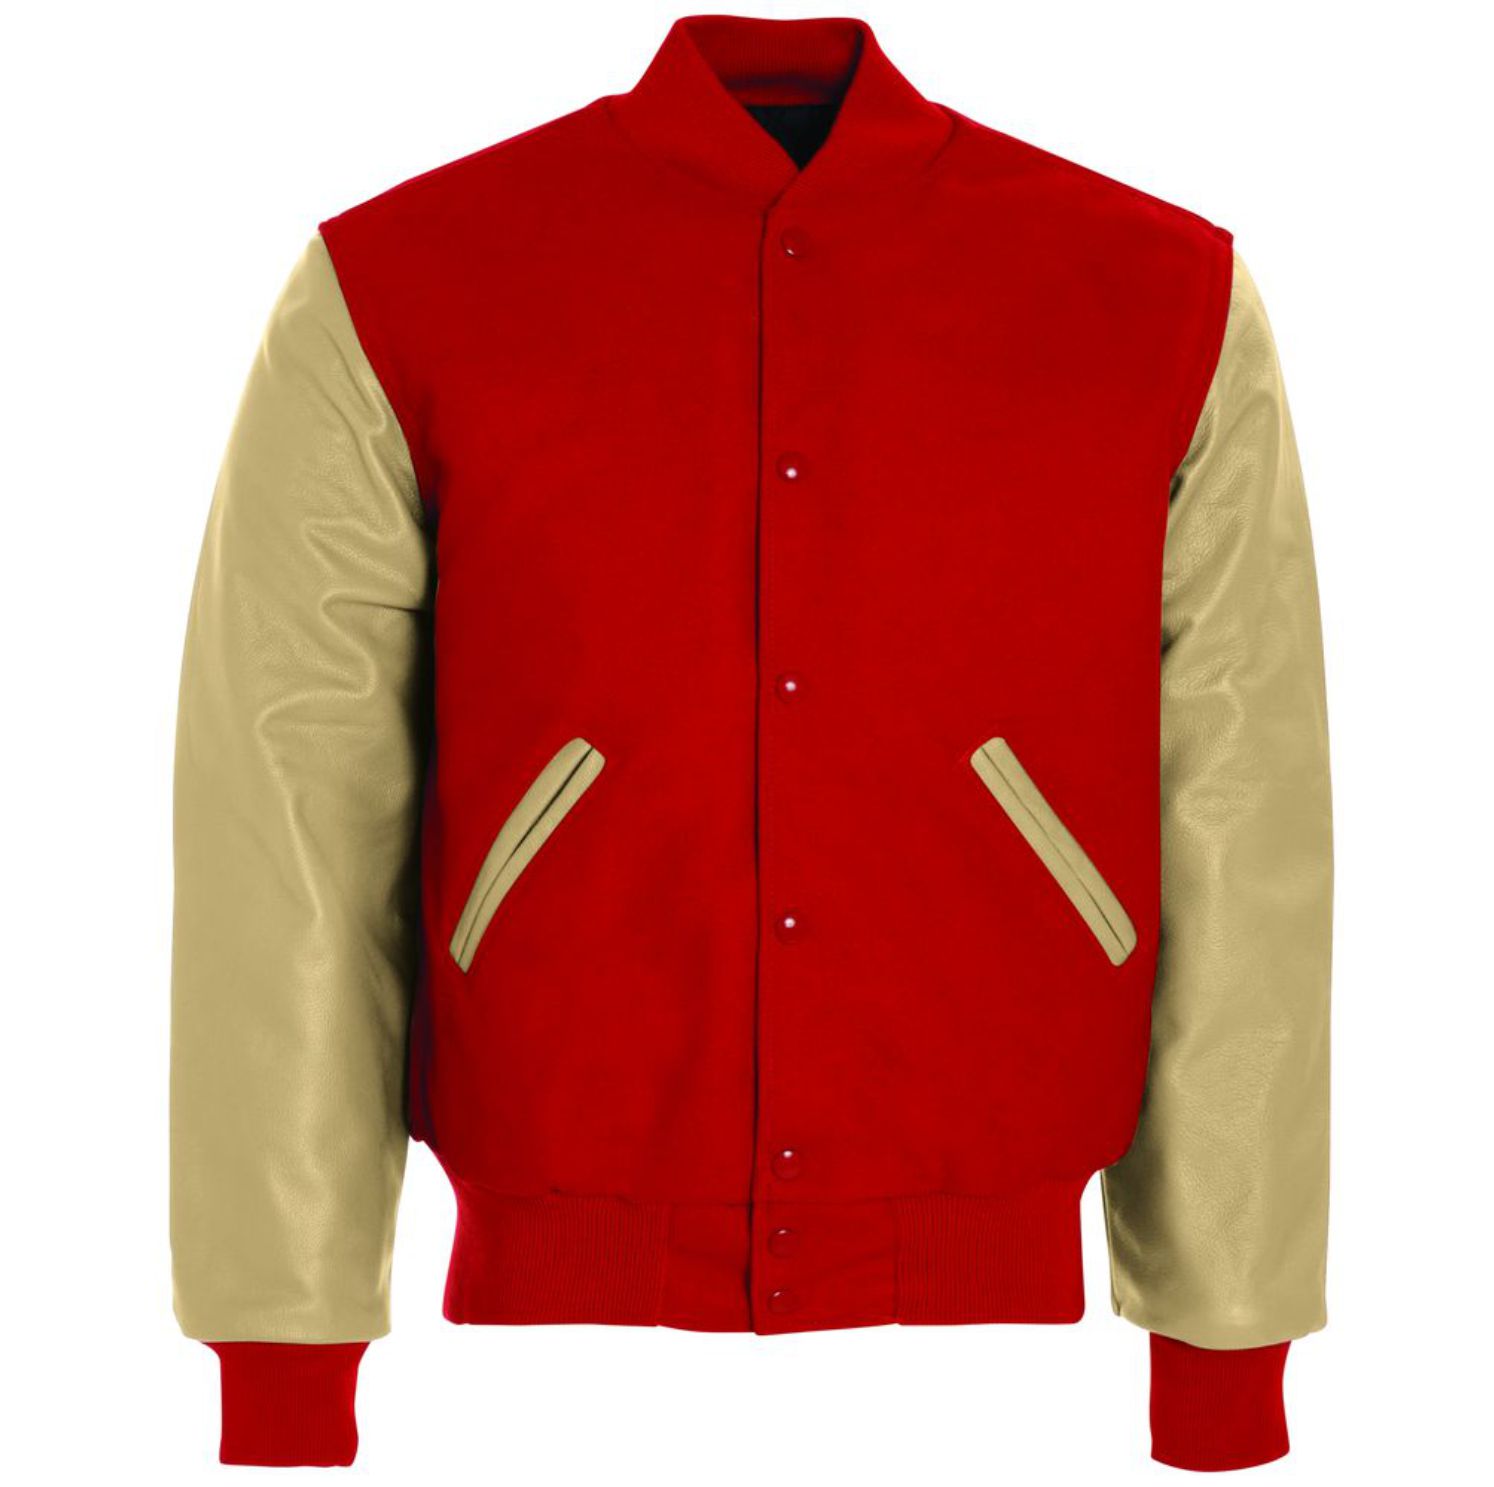 Holloway Varsity Jacket #224183 Scarlet / Cream